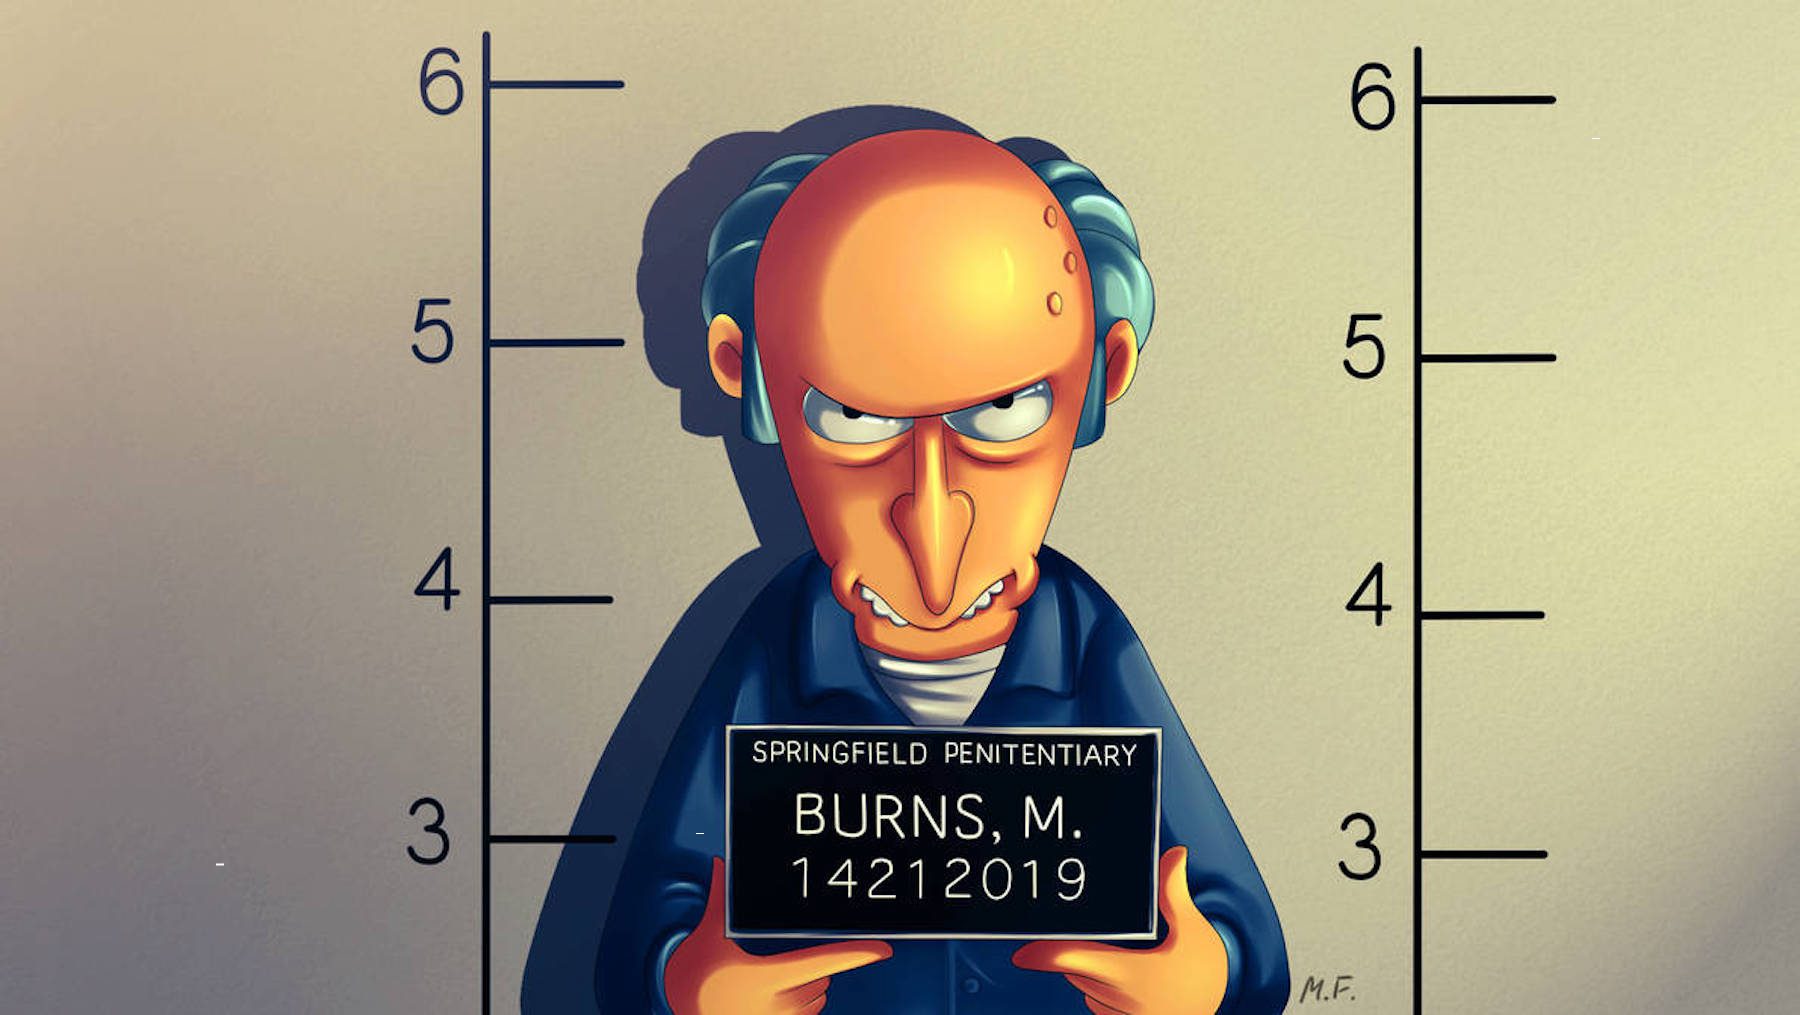 Fan art of Mr. Burns getting a mugshot taken at Springfield Penitentiary.